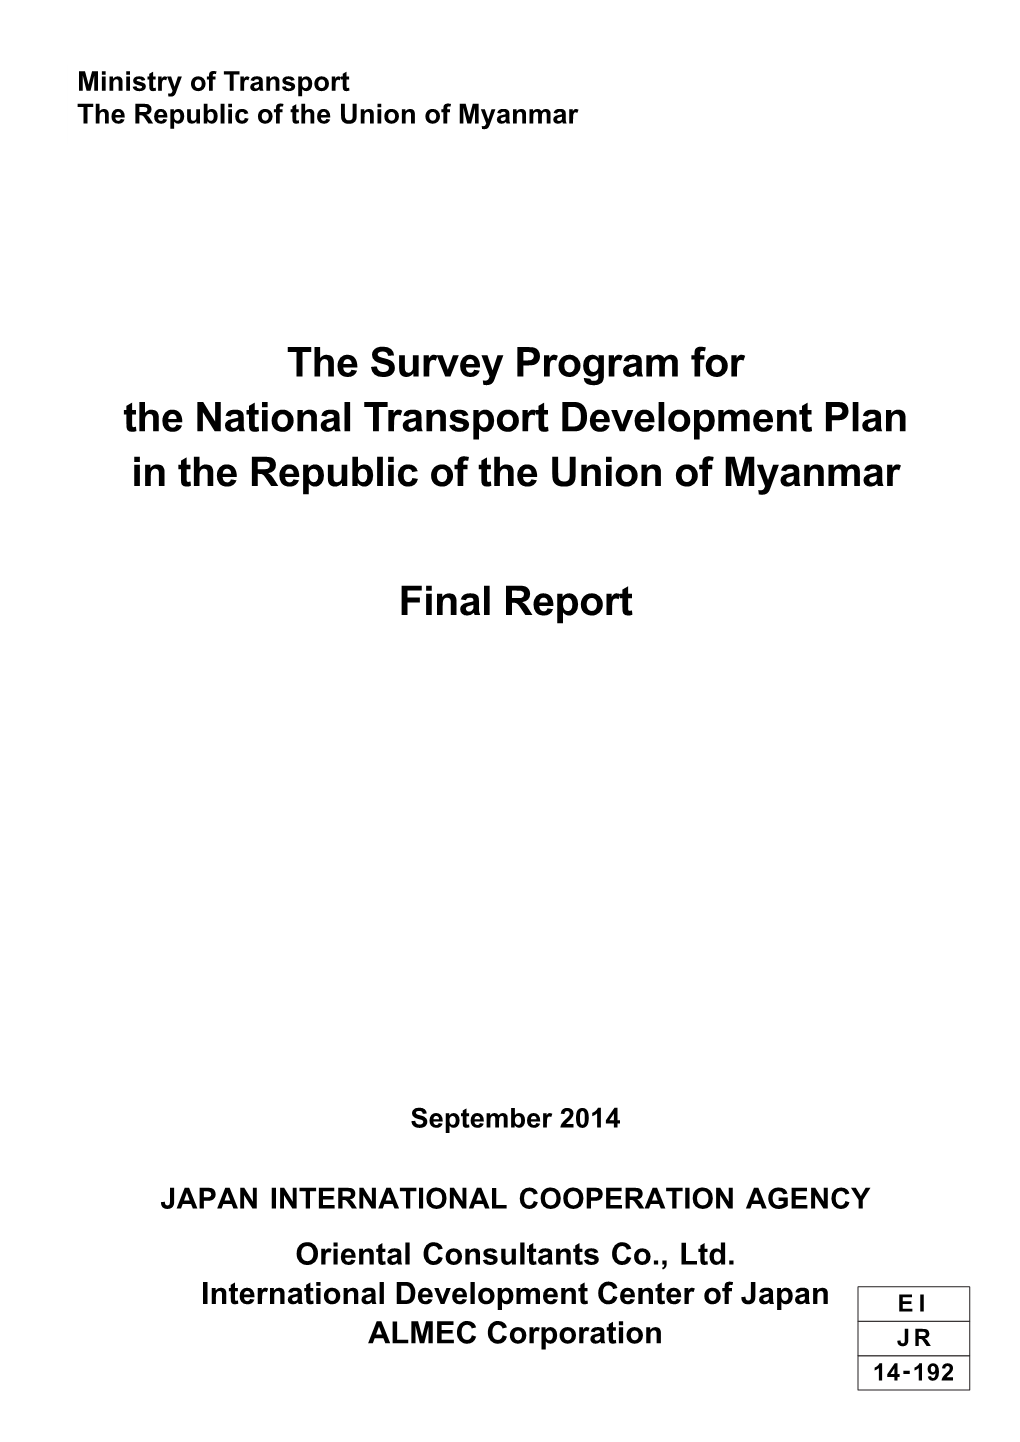 National Transport Master Plan